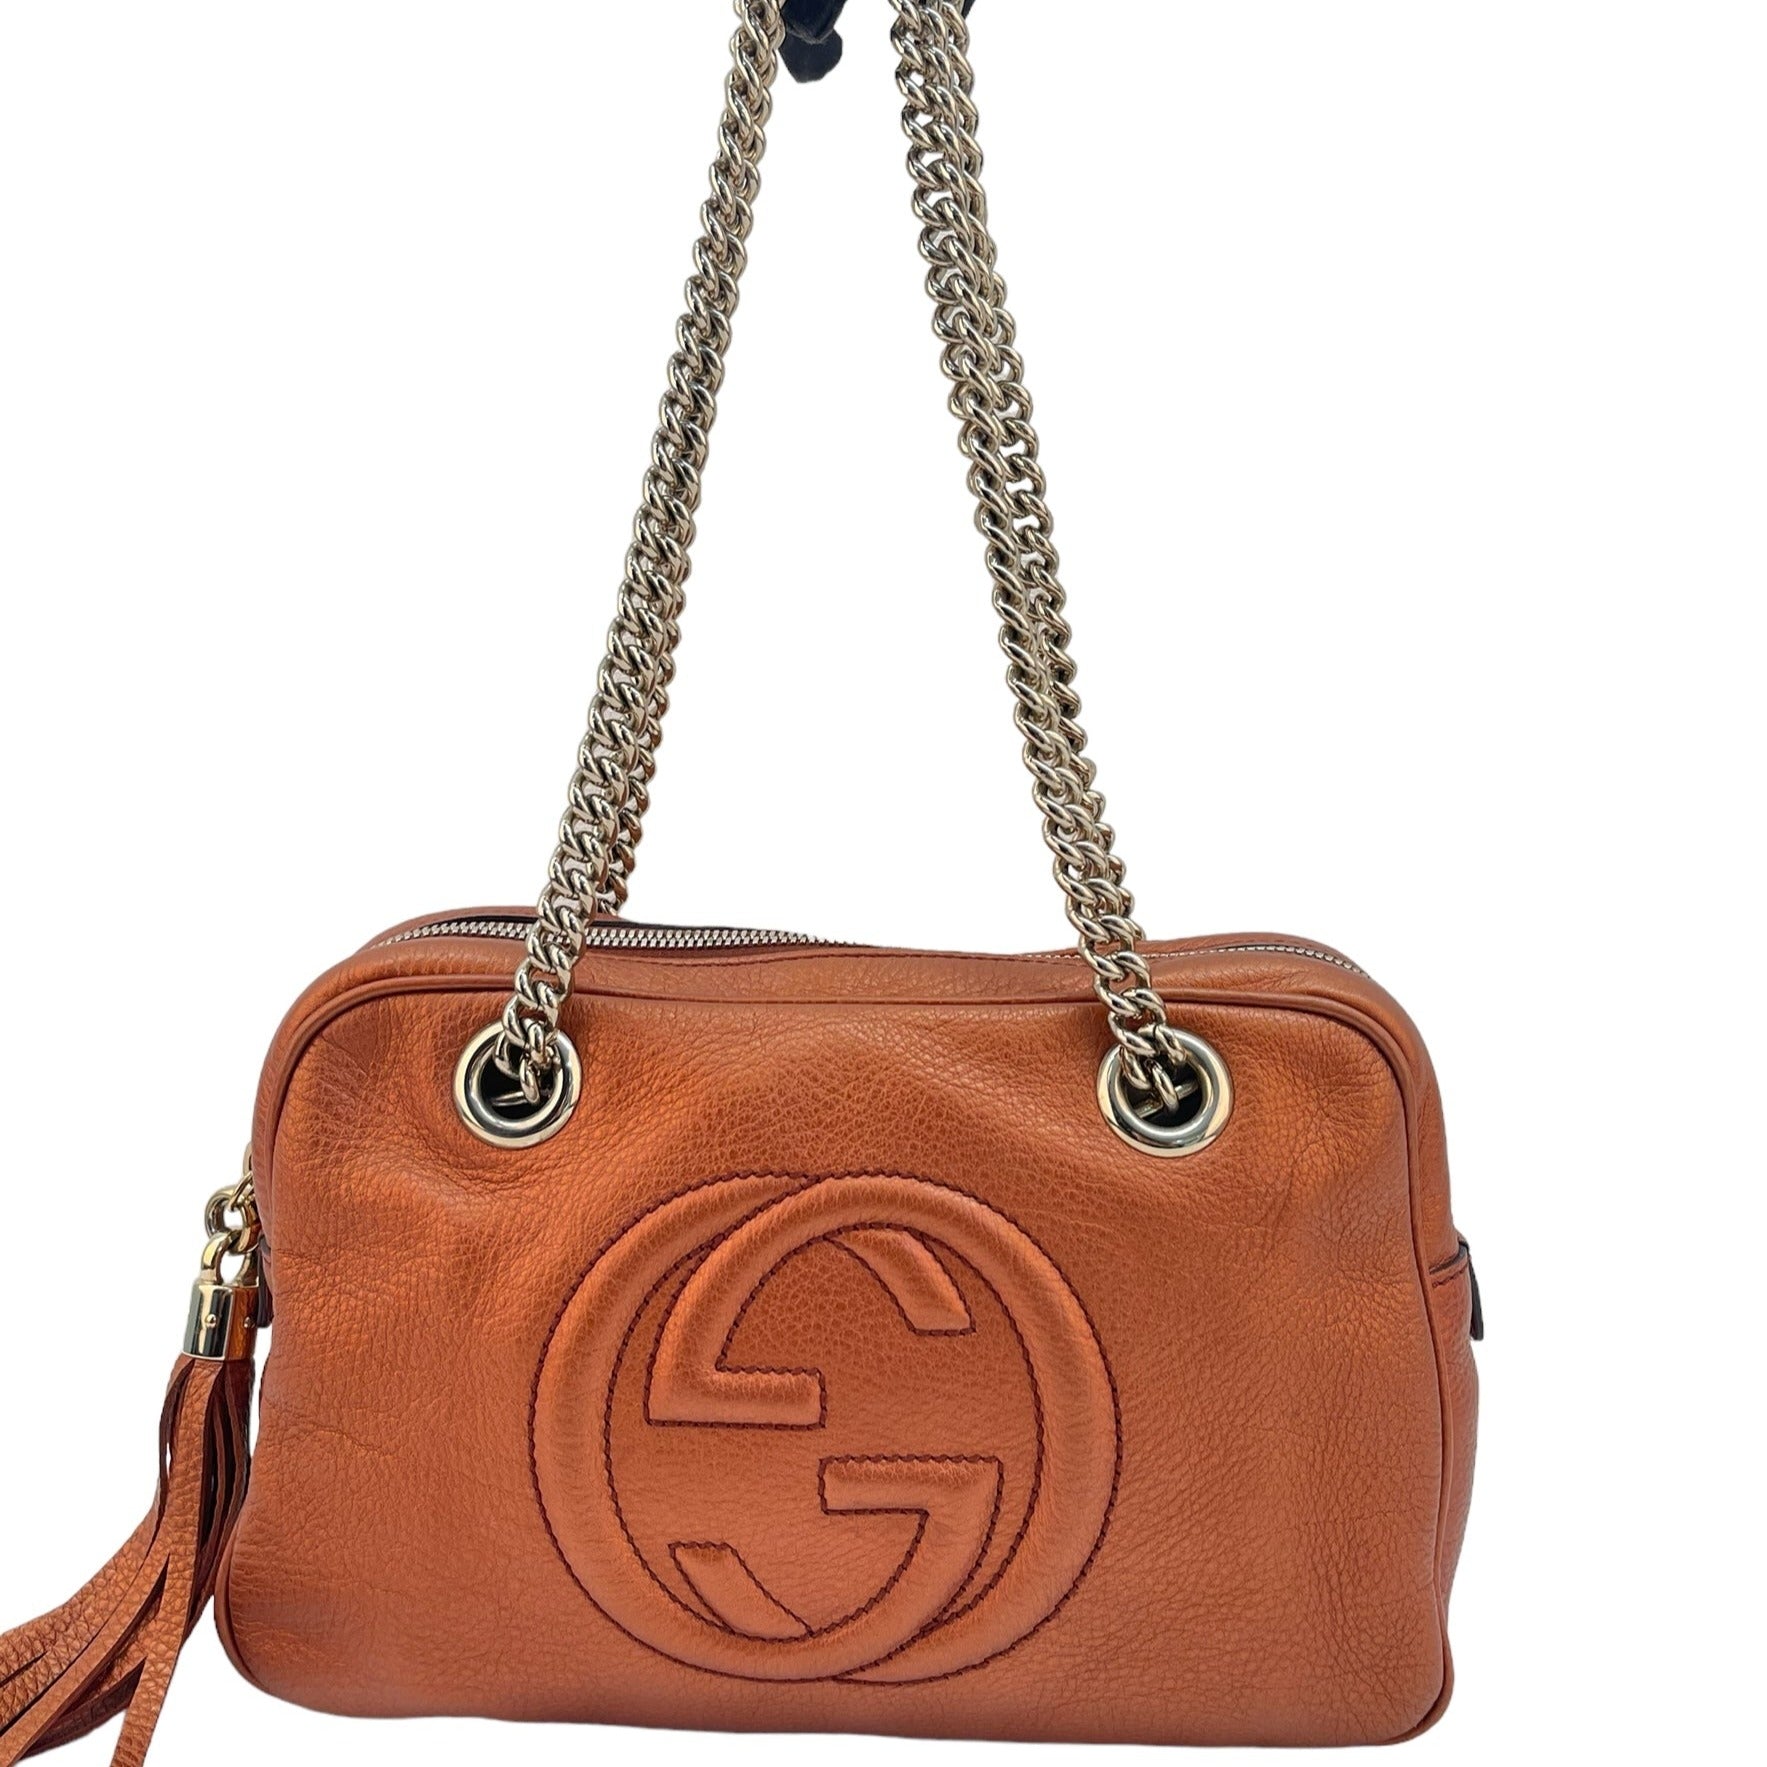 Gucci Metallic Soho chain shoulder bag